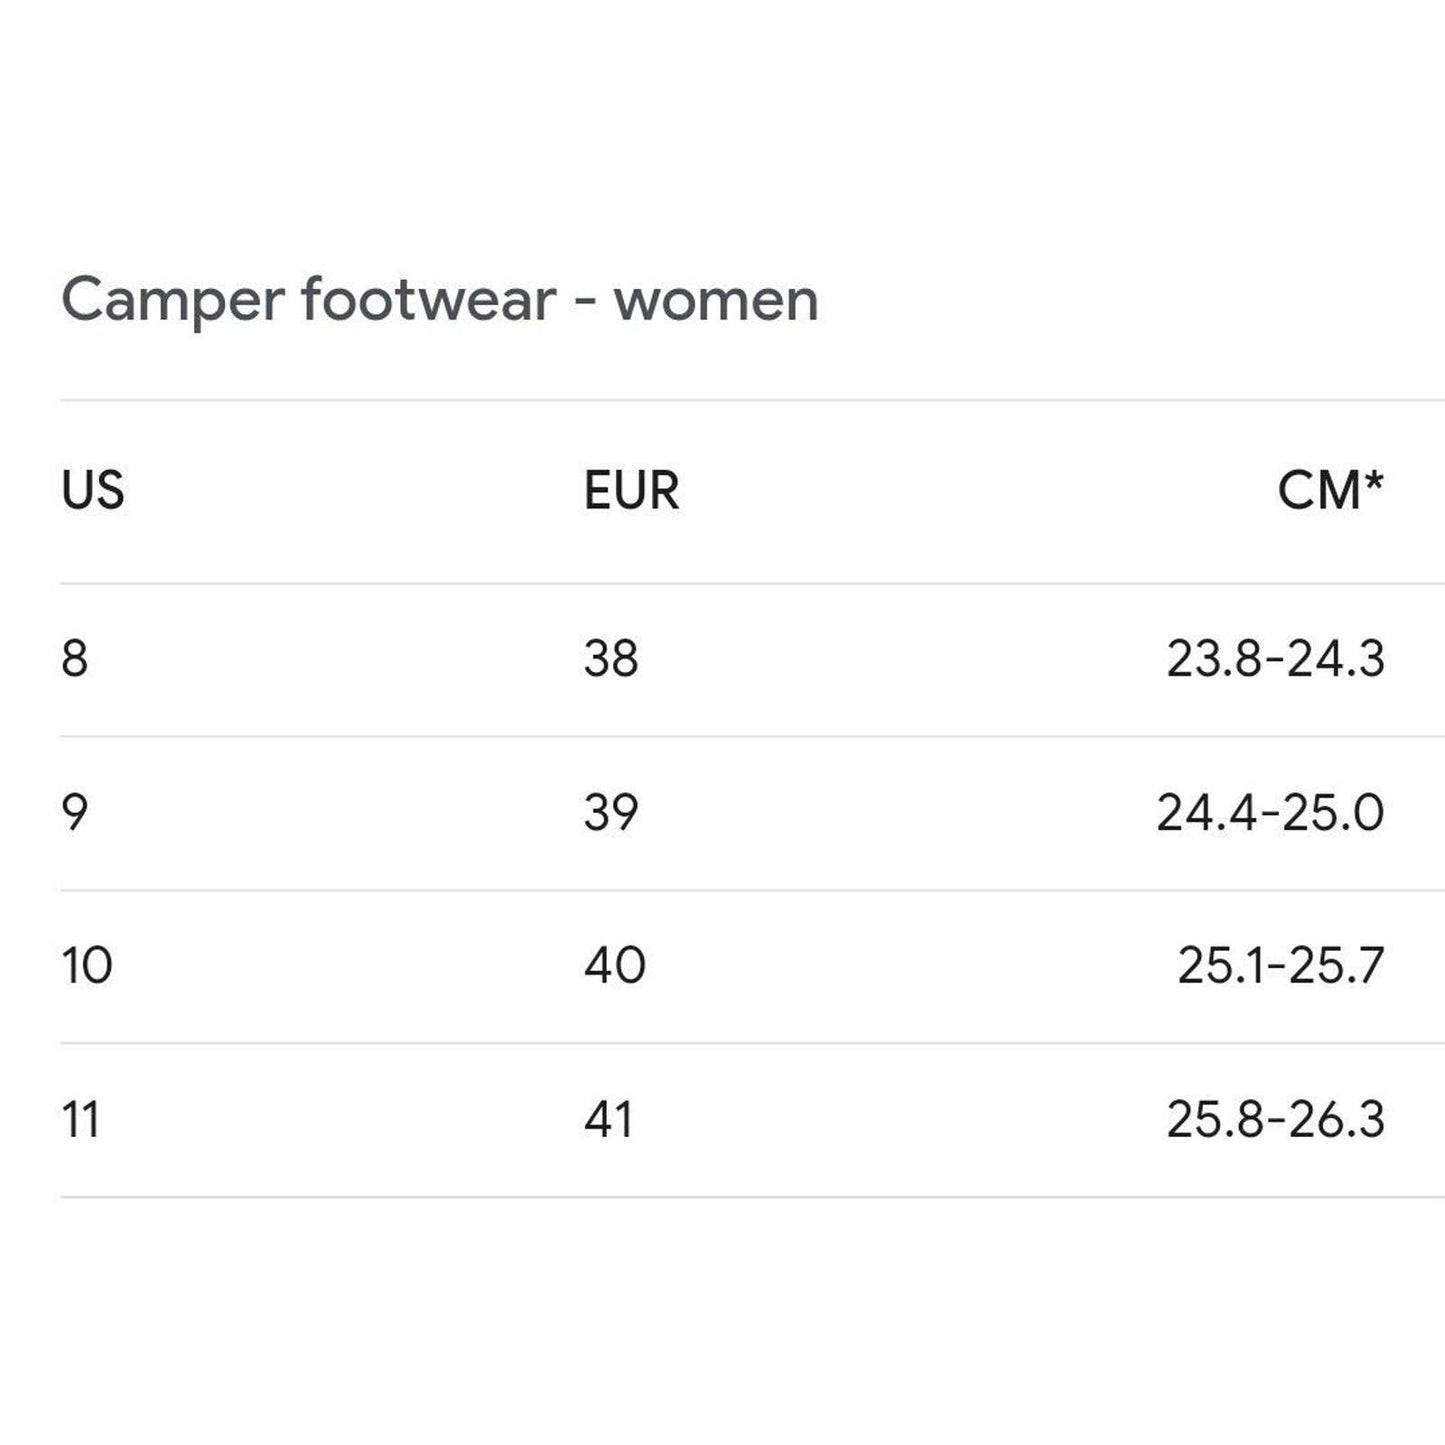 Camper Laika Platform Women Sneakers Blue Suede Mesh Size EU40 /US 9.5